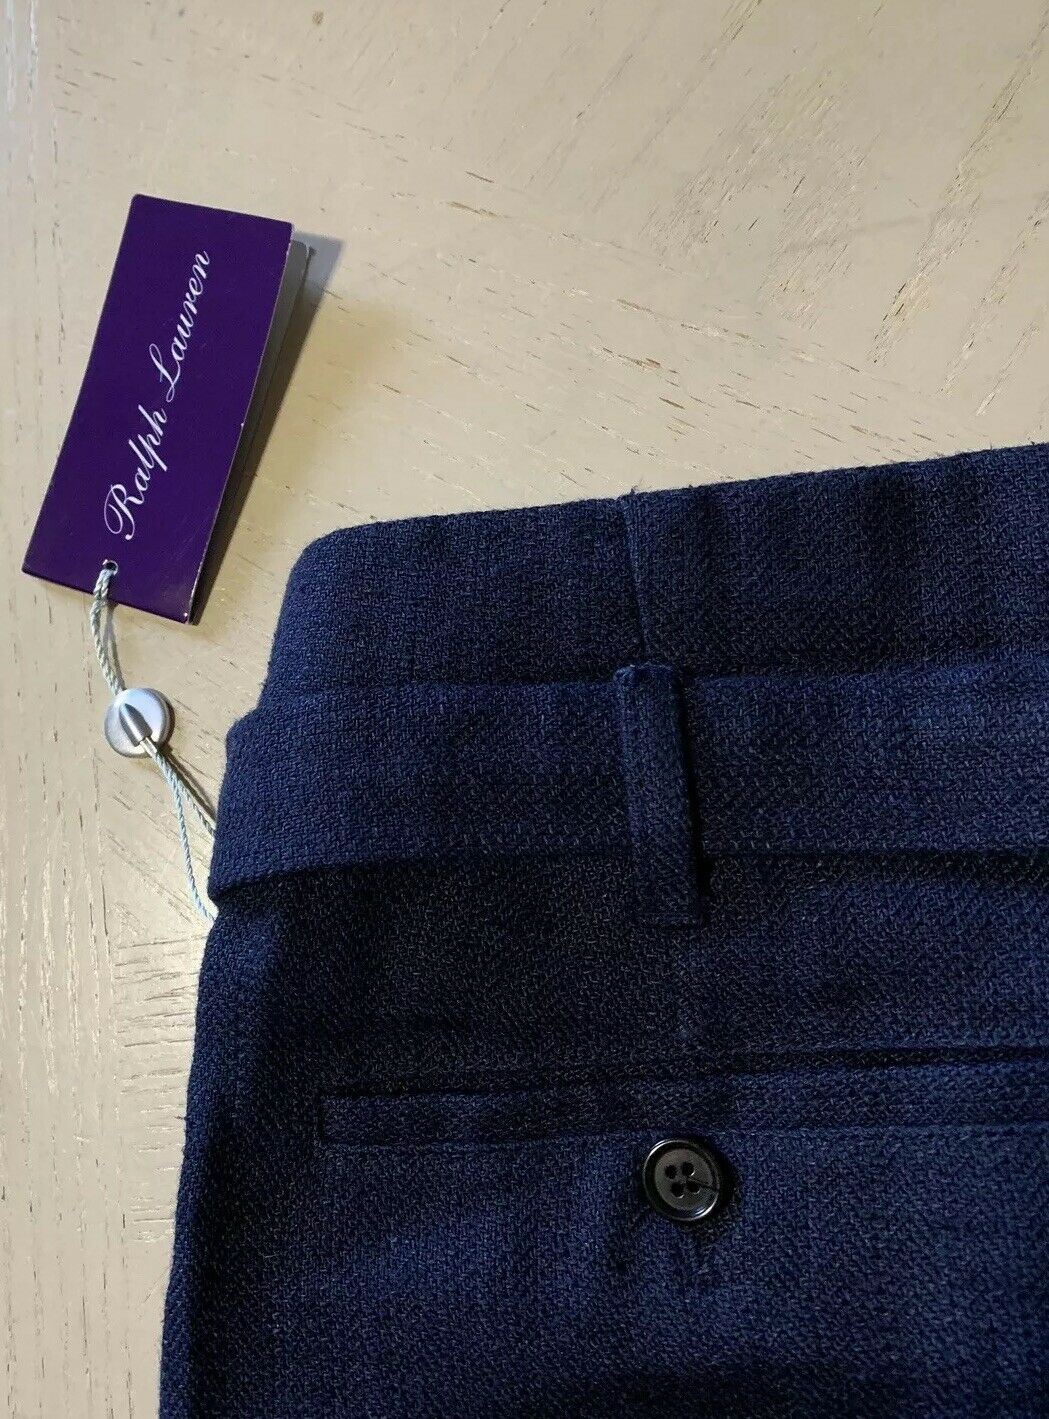 Neu mit Etikett: 595 $ Ralph Lauren Purple Label Herren-Leinenhose Navy 38 US (54 Euro) Italien